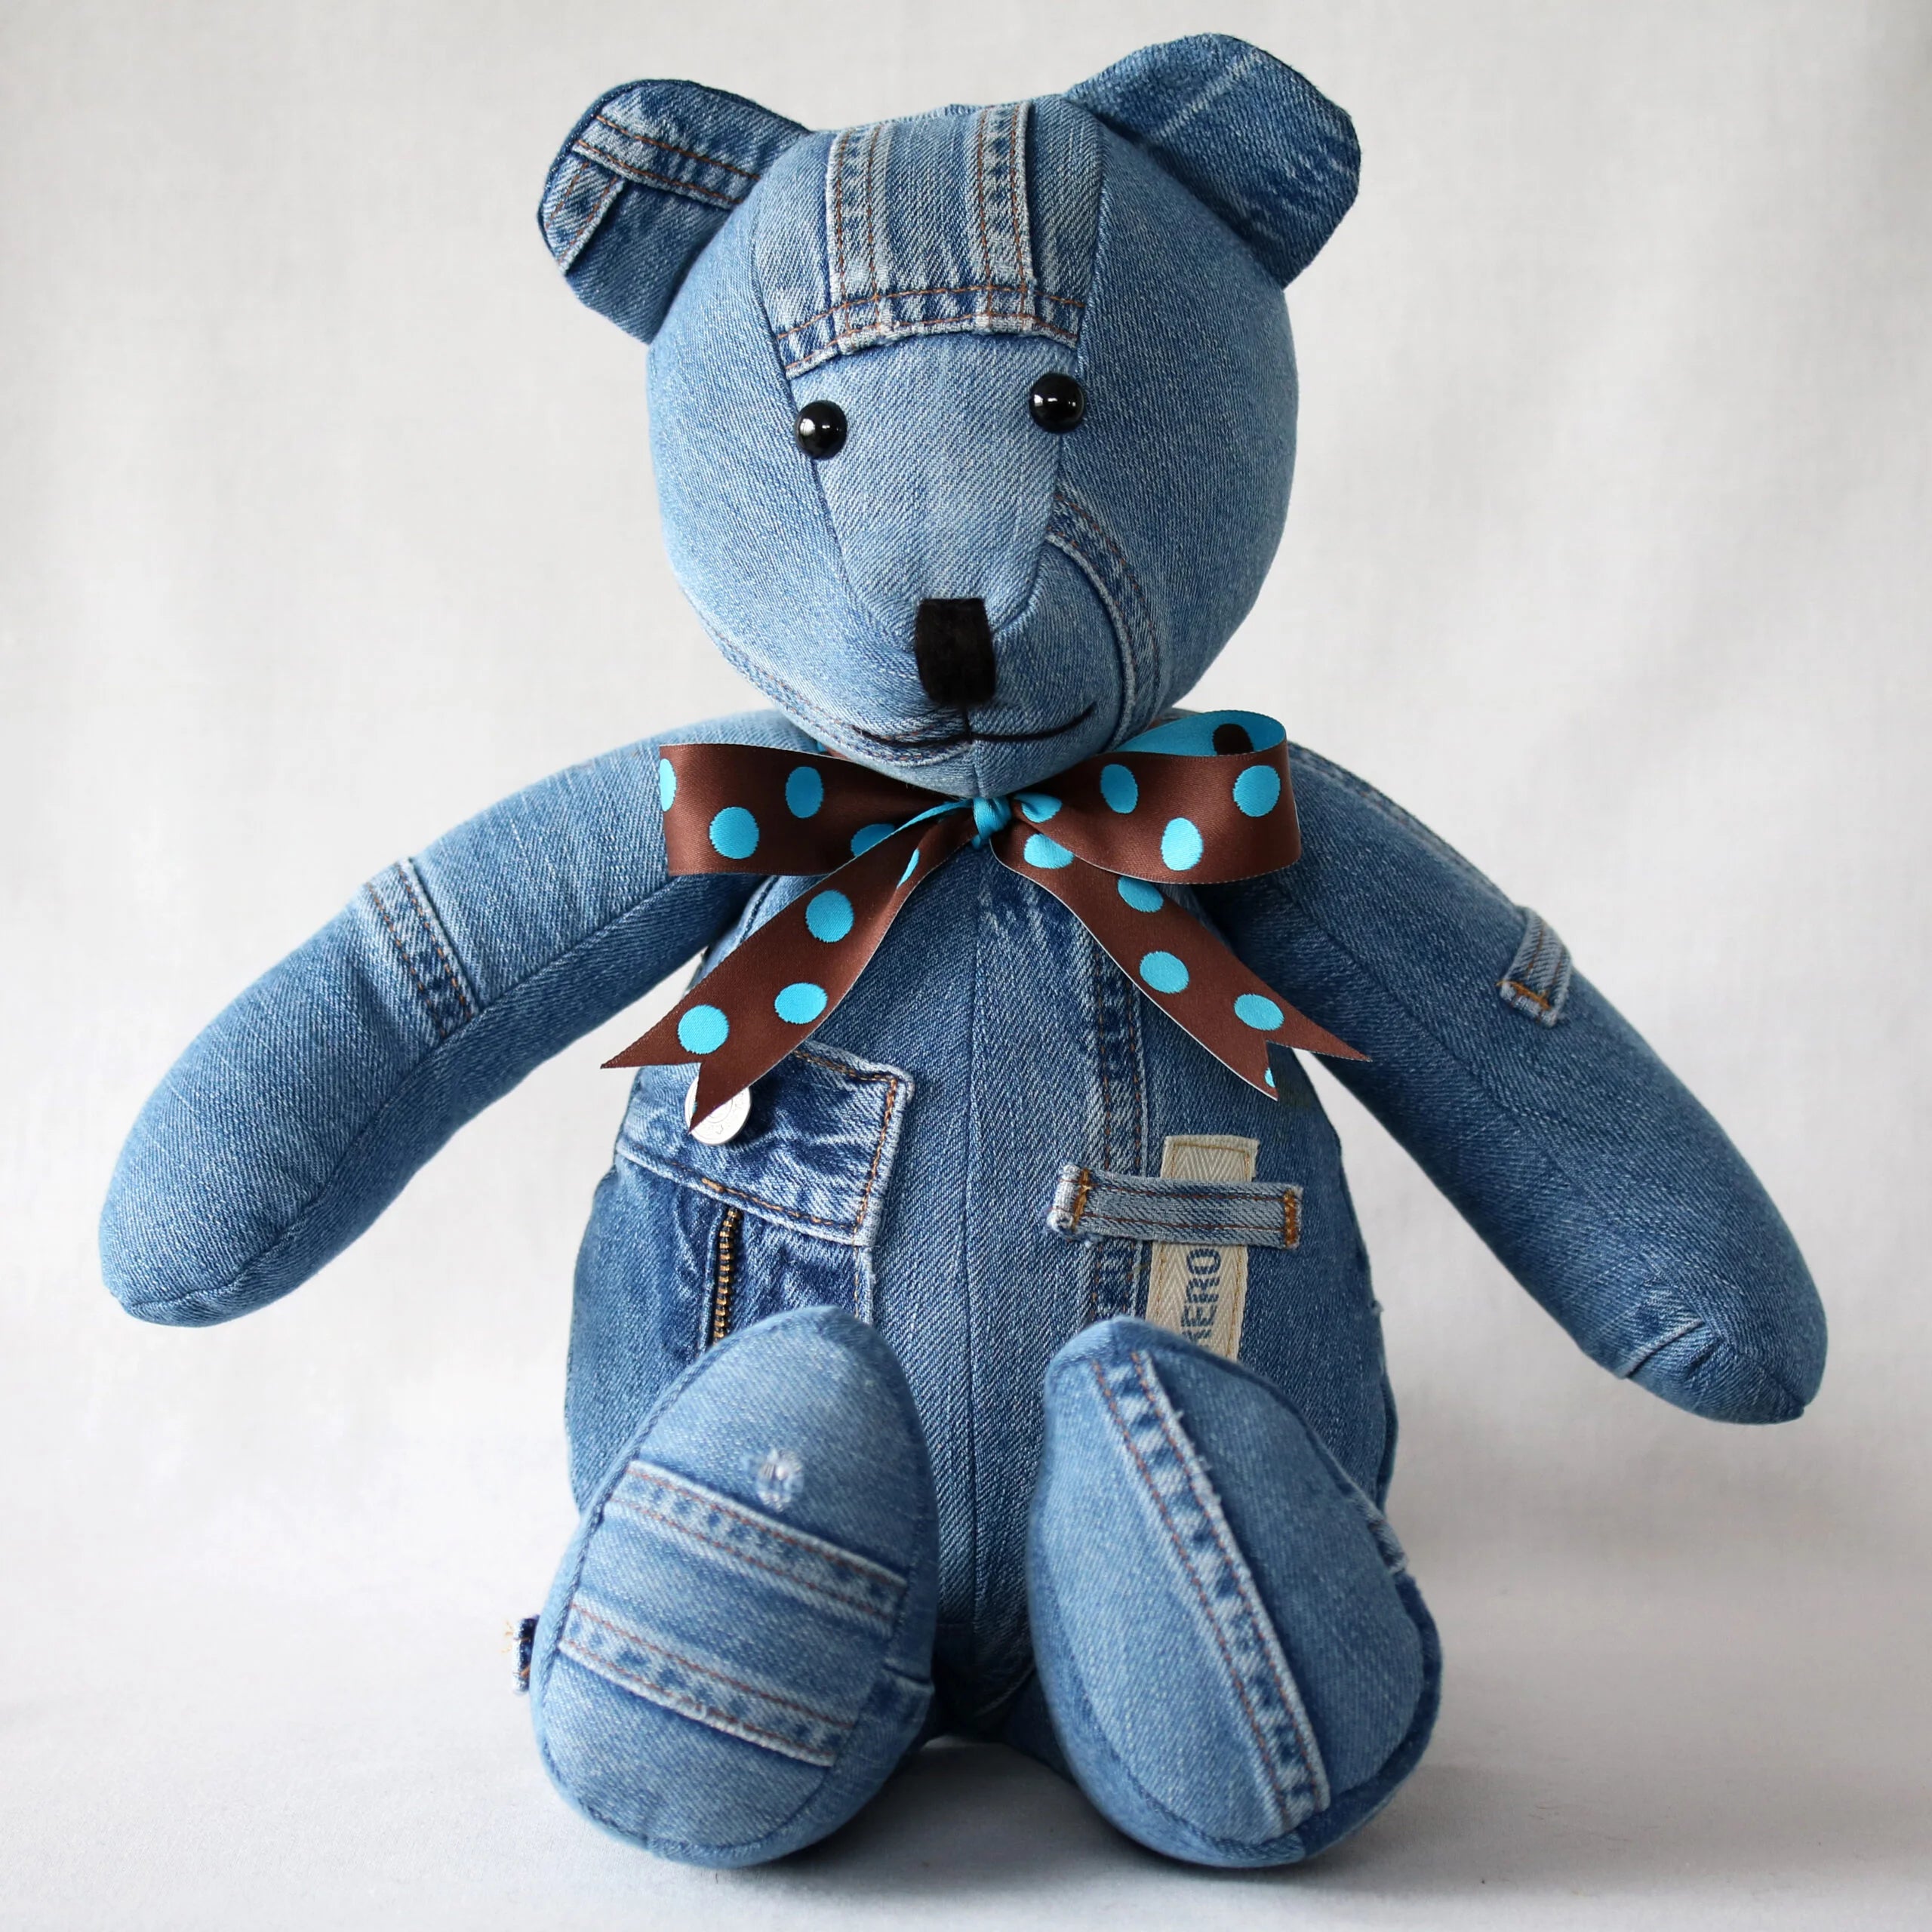 Jean Bear The Handmade Bear from Canterbury Bears.